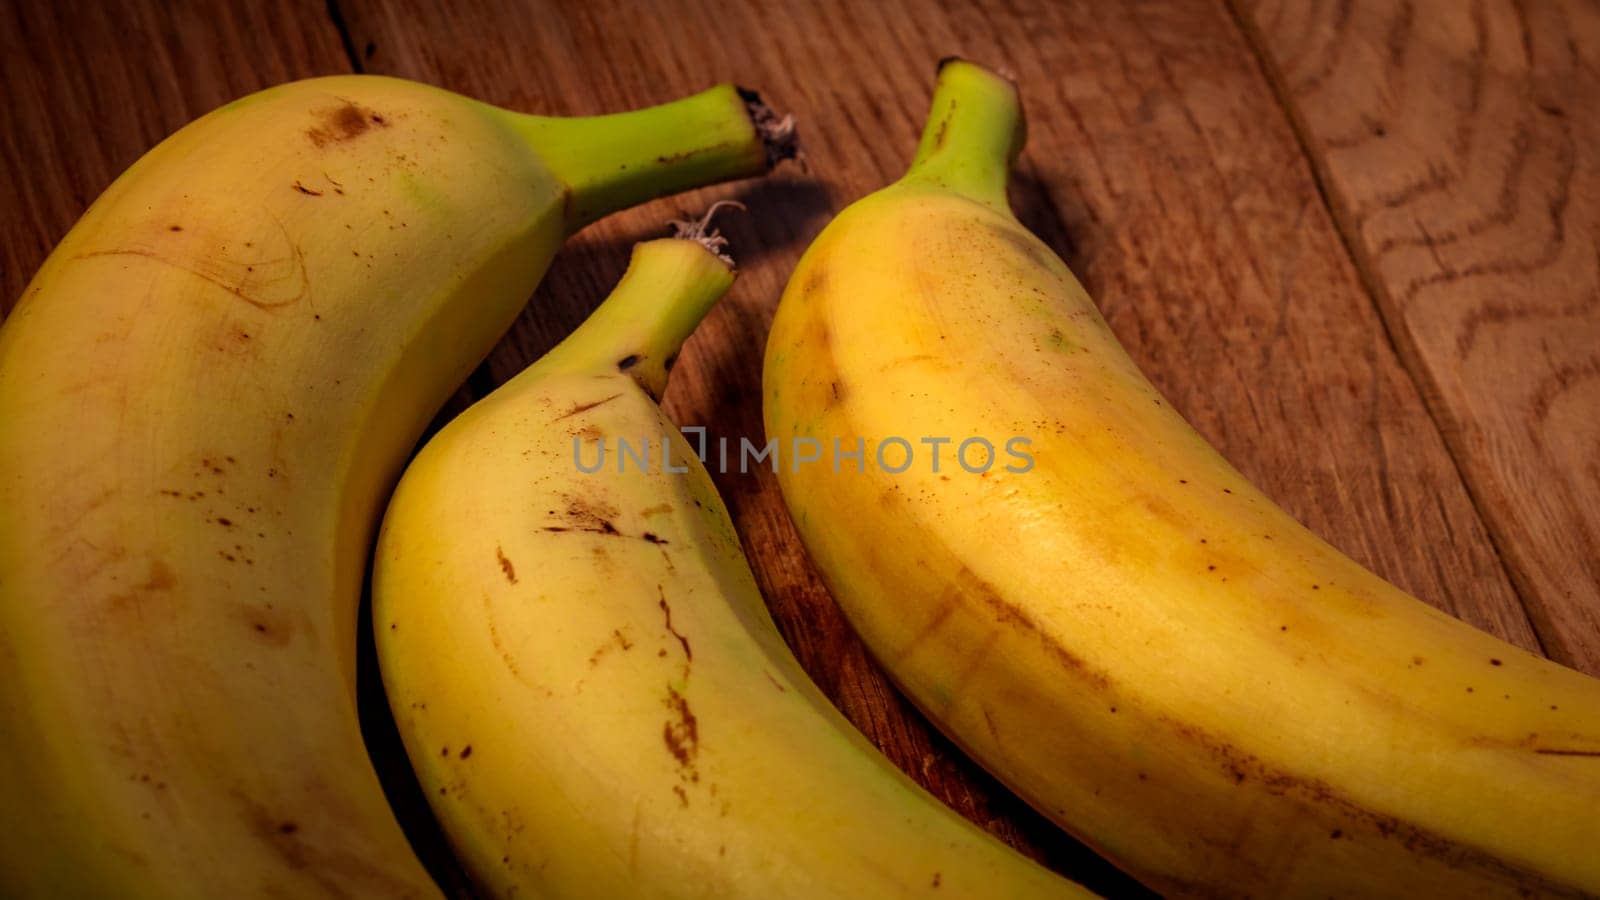 Fresh ripe bananas on a wooden board.